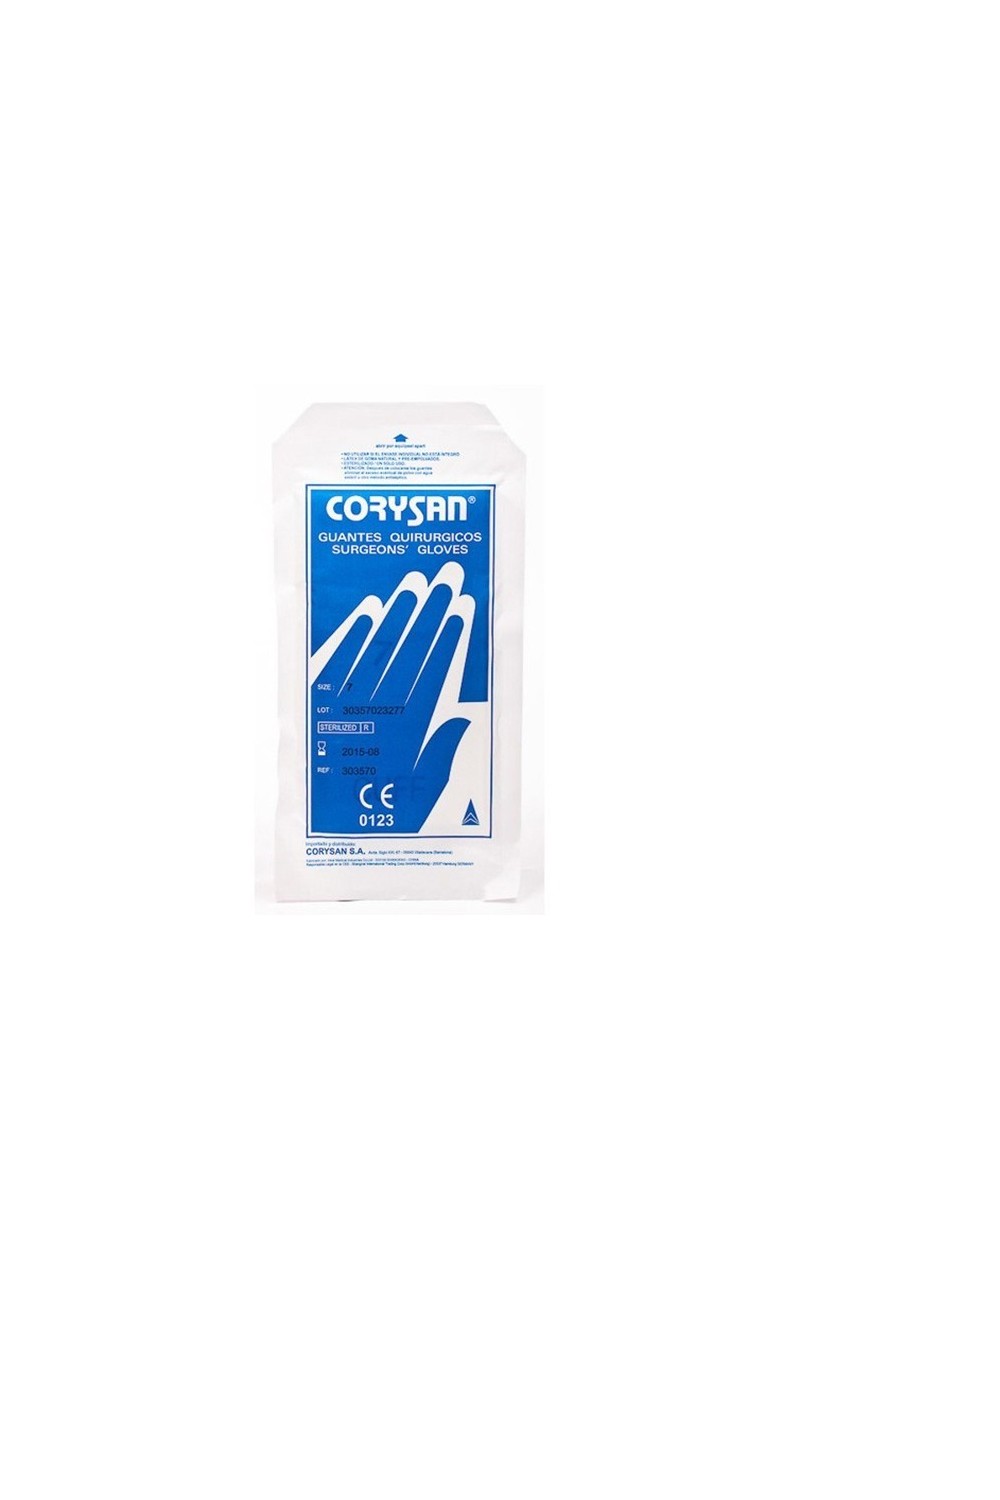 Corysan Sterile Latex Sterile Surgery Gloves Size 8,5 2U